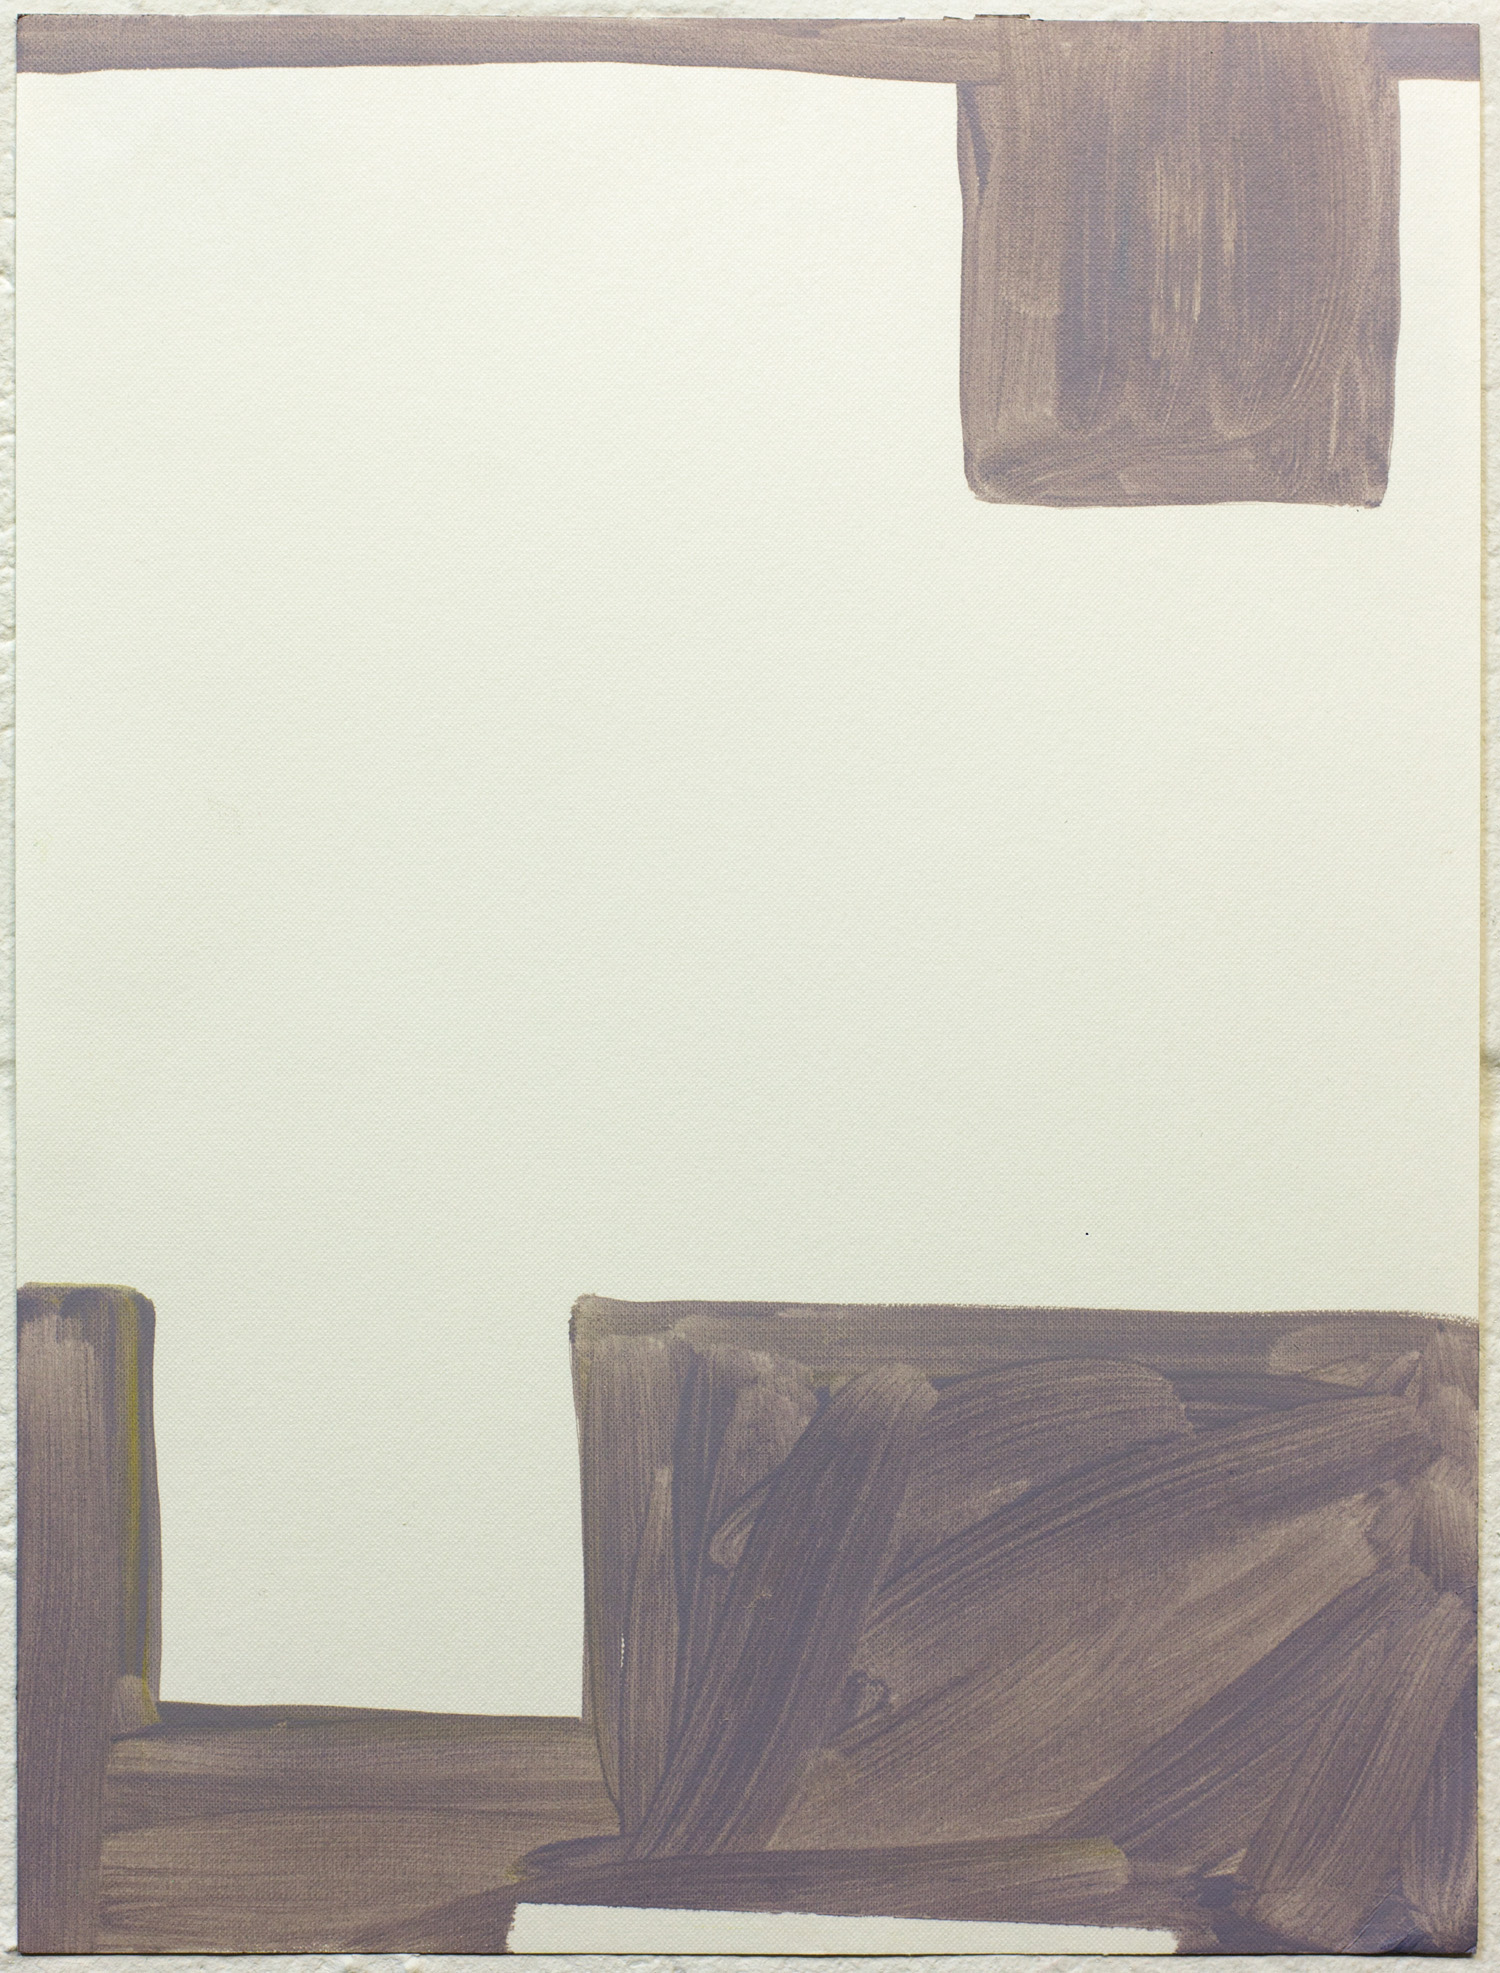   Untitled &nbsp;2014  Oil on paper  40 x 30 cm 